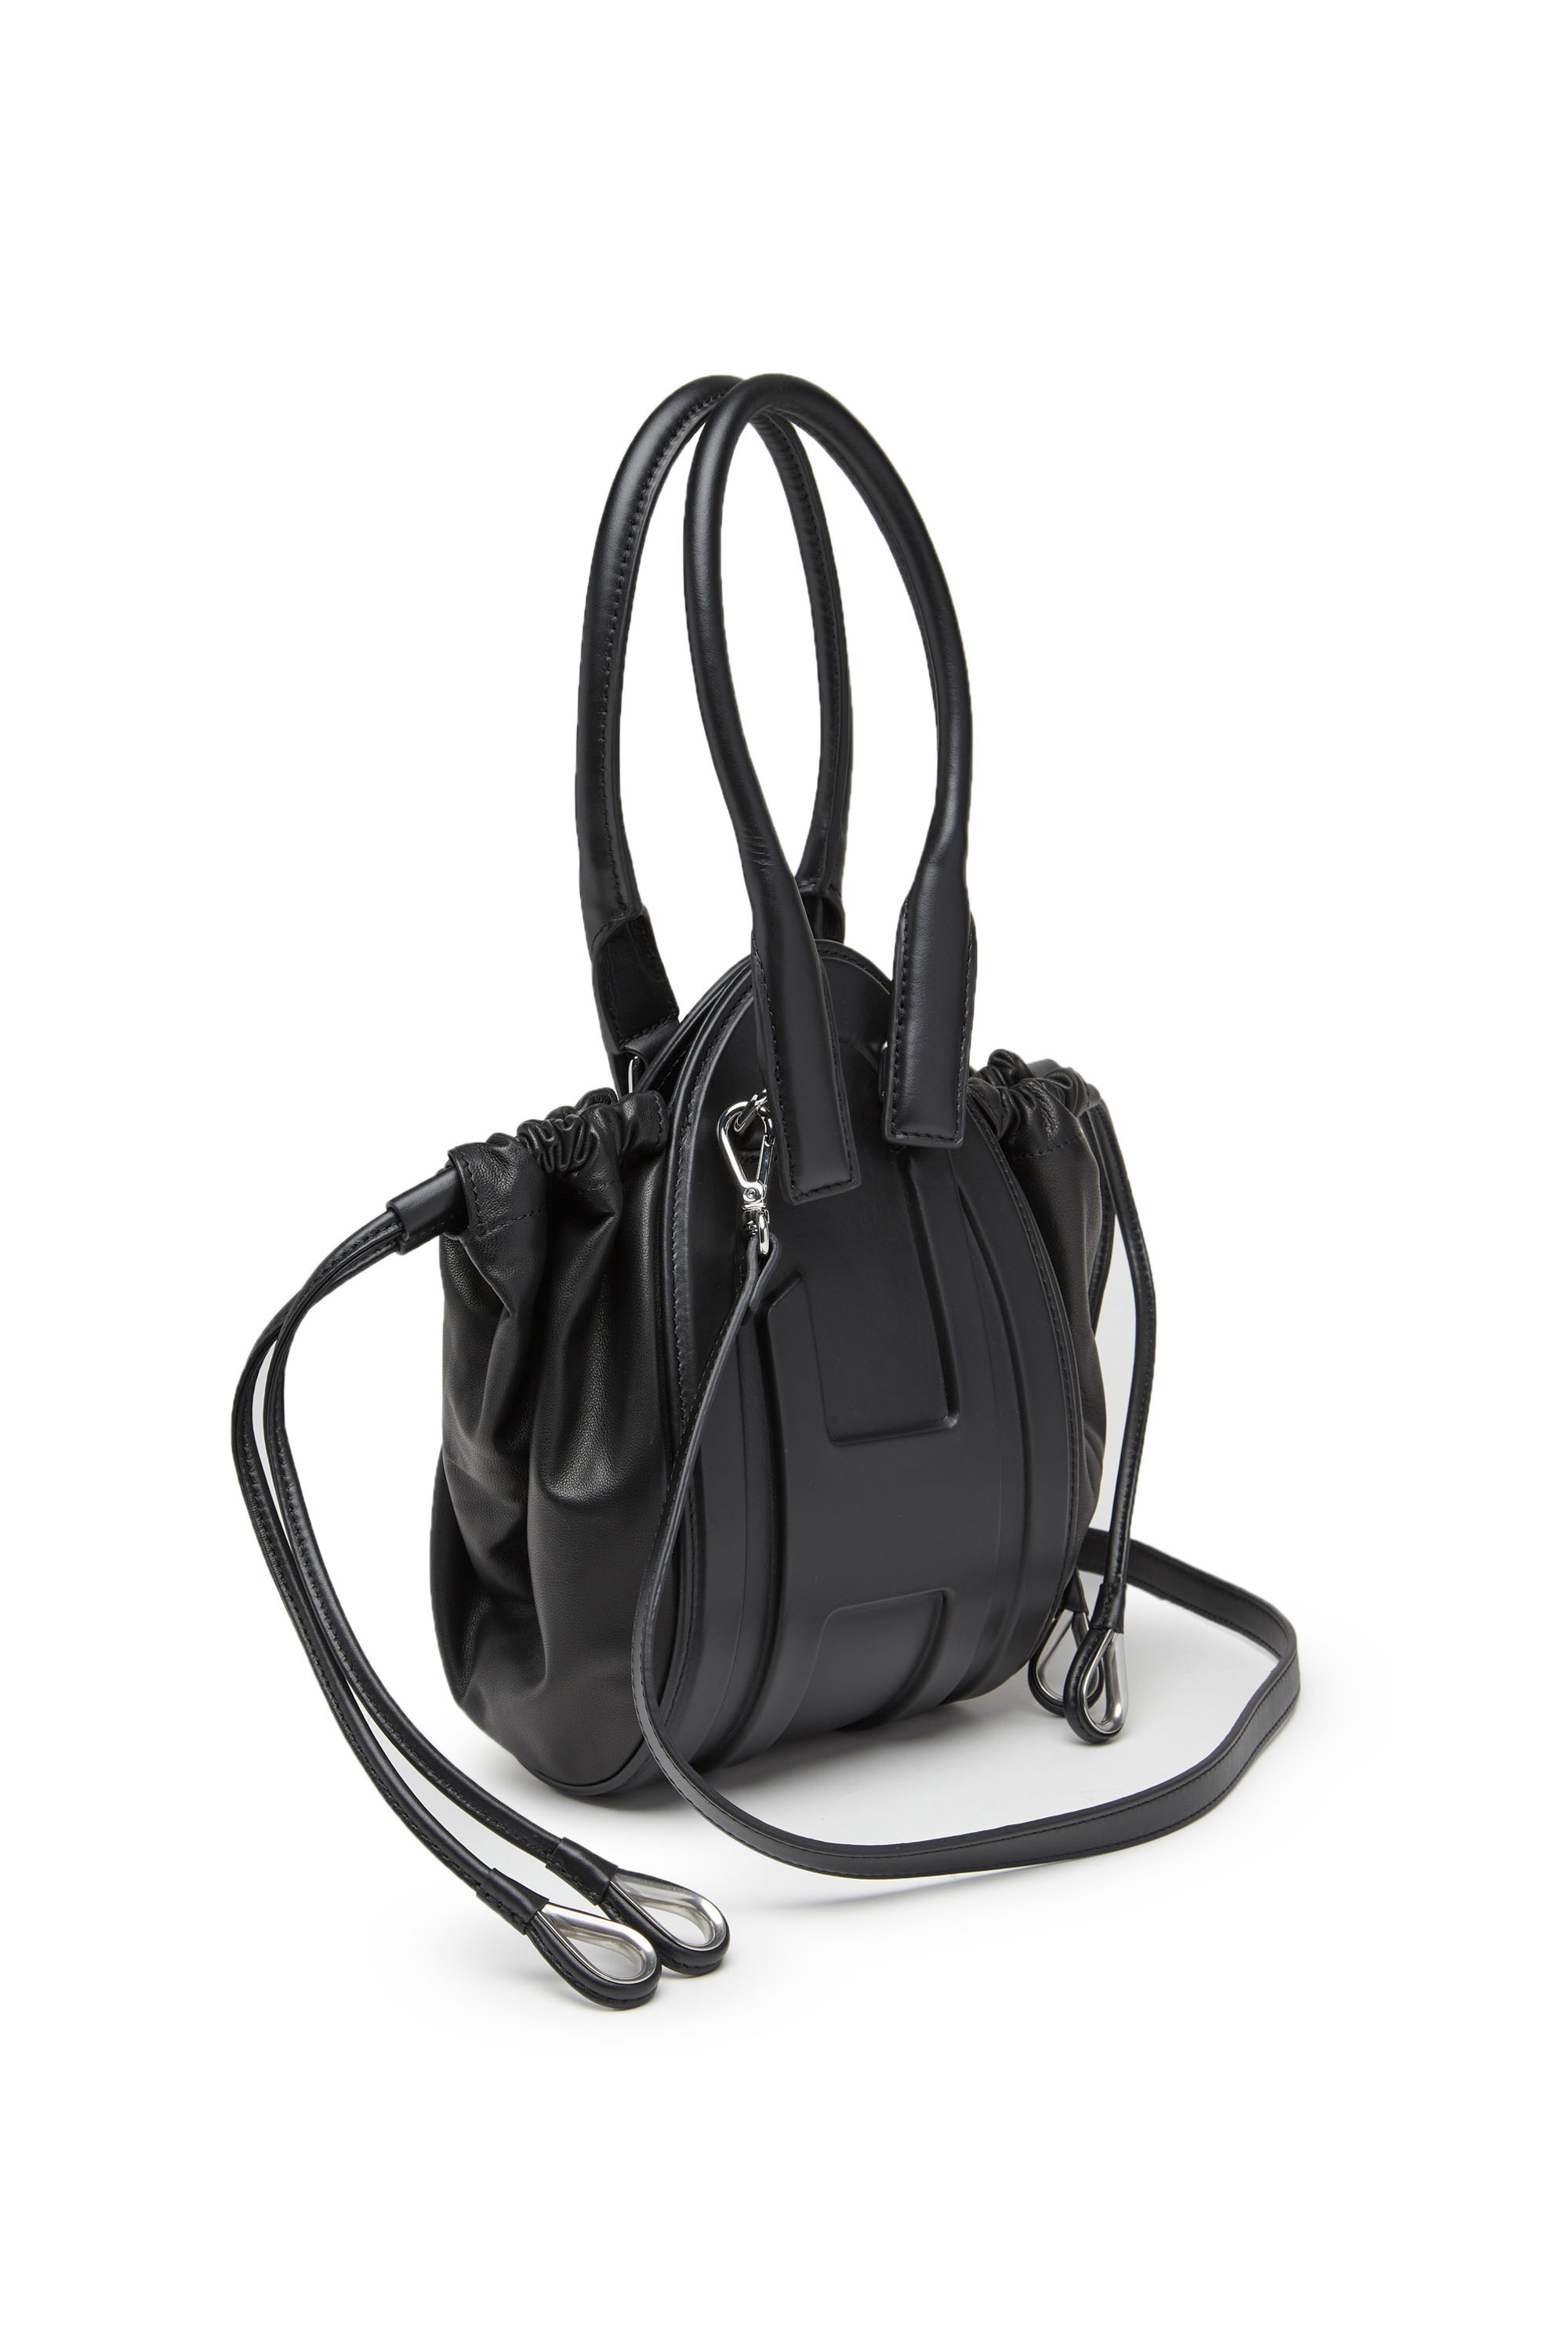 Diesel - 1DR-FOLD XS, Woman 1DR-Fold XS-Oval logo handbag in nappa leather in Black - Image 5